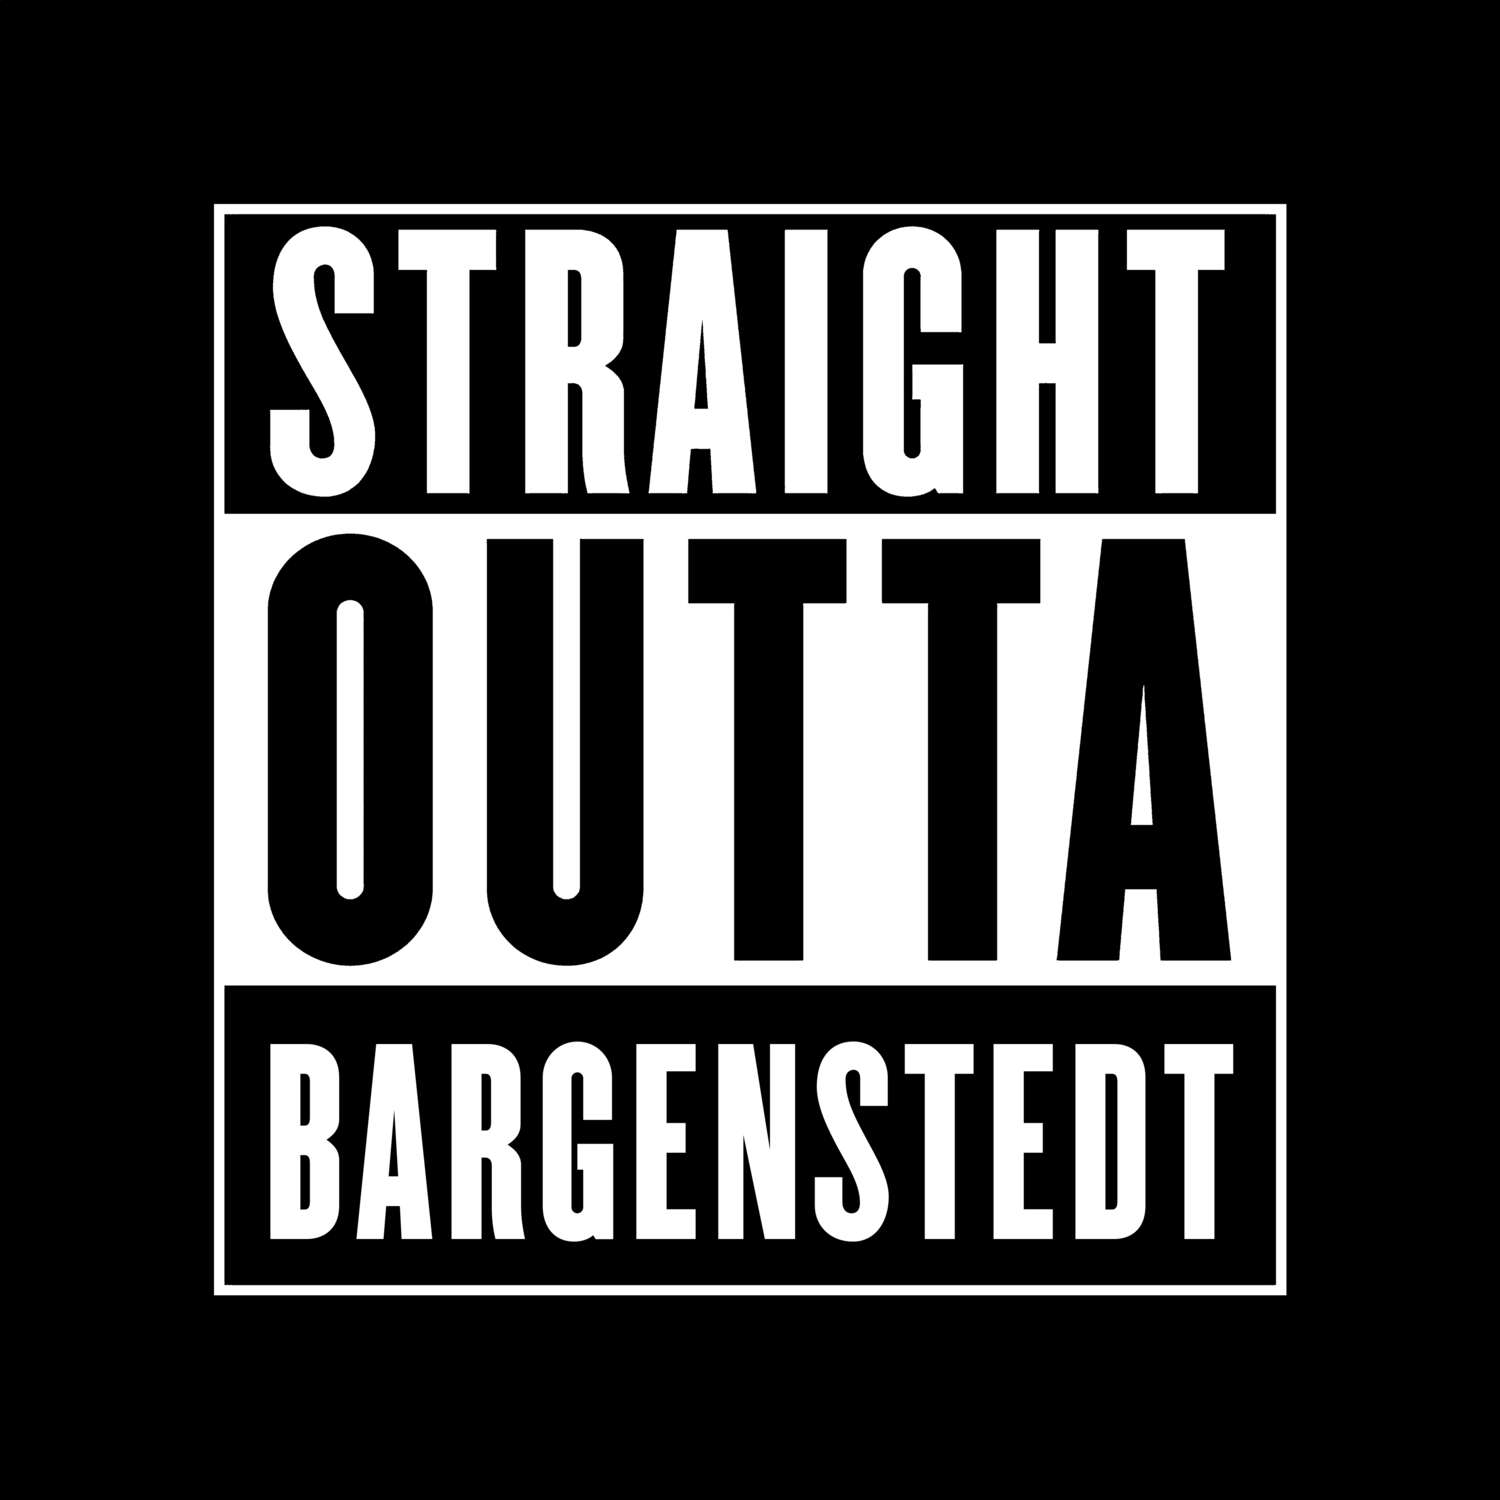 Bargenstedt T-Shirt »Straight Outta«